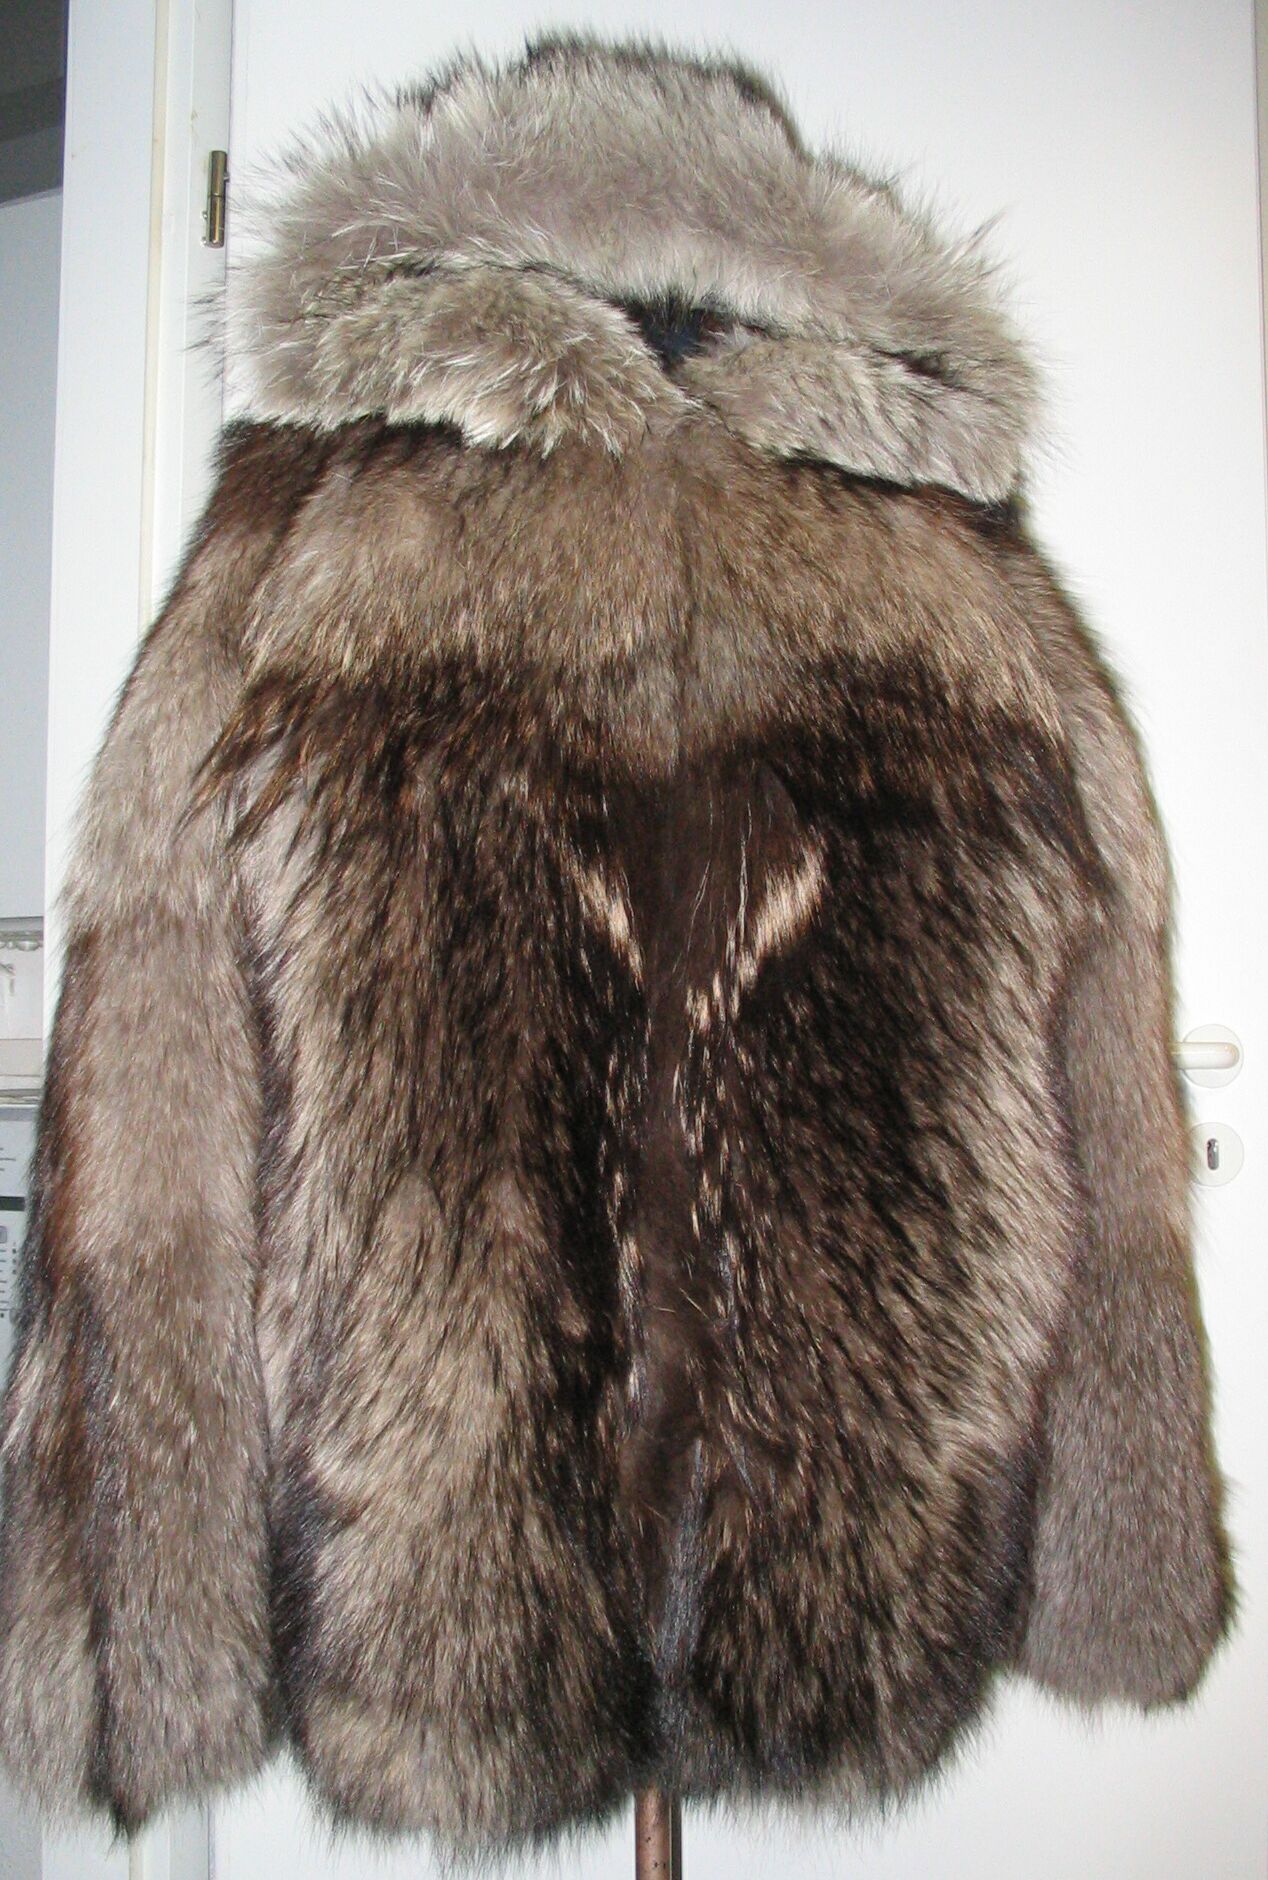 Fur clothing - Wikipedia